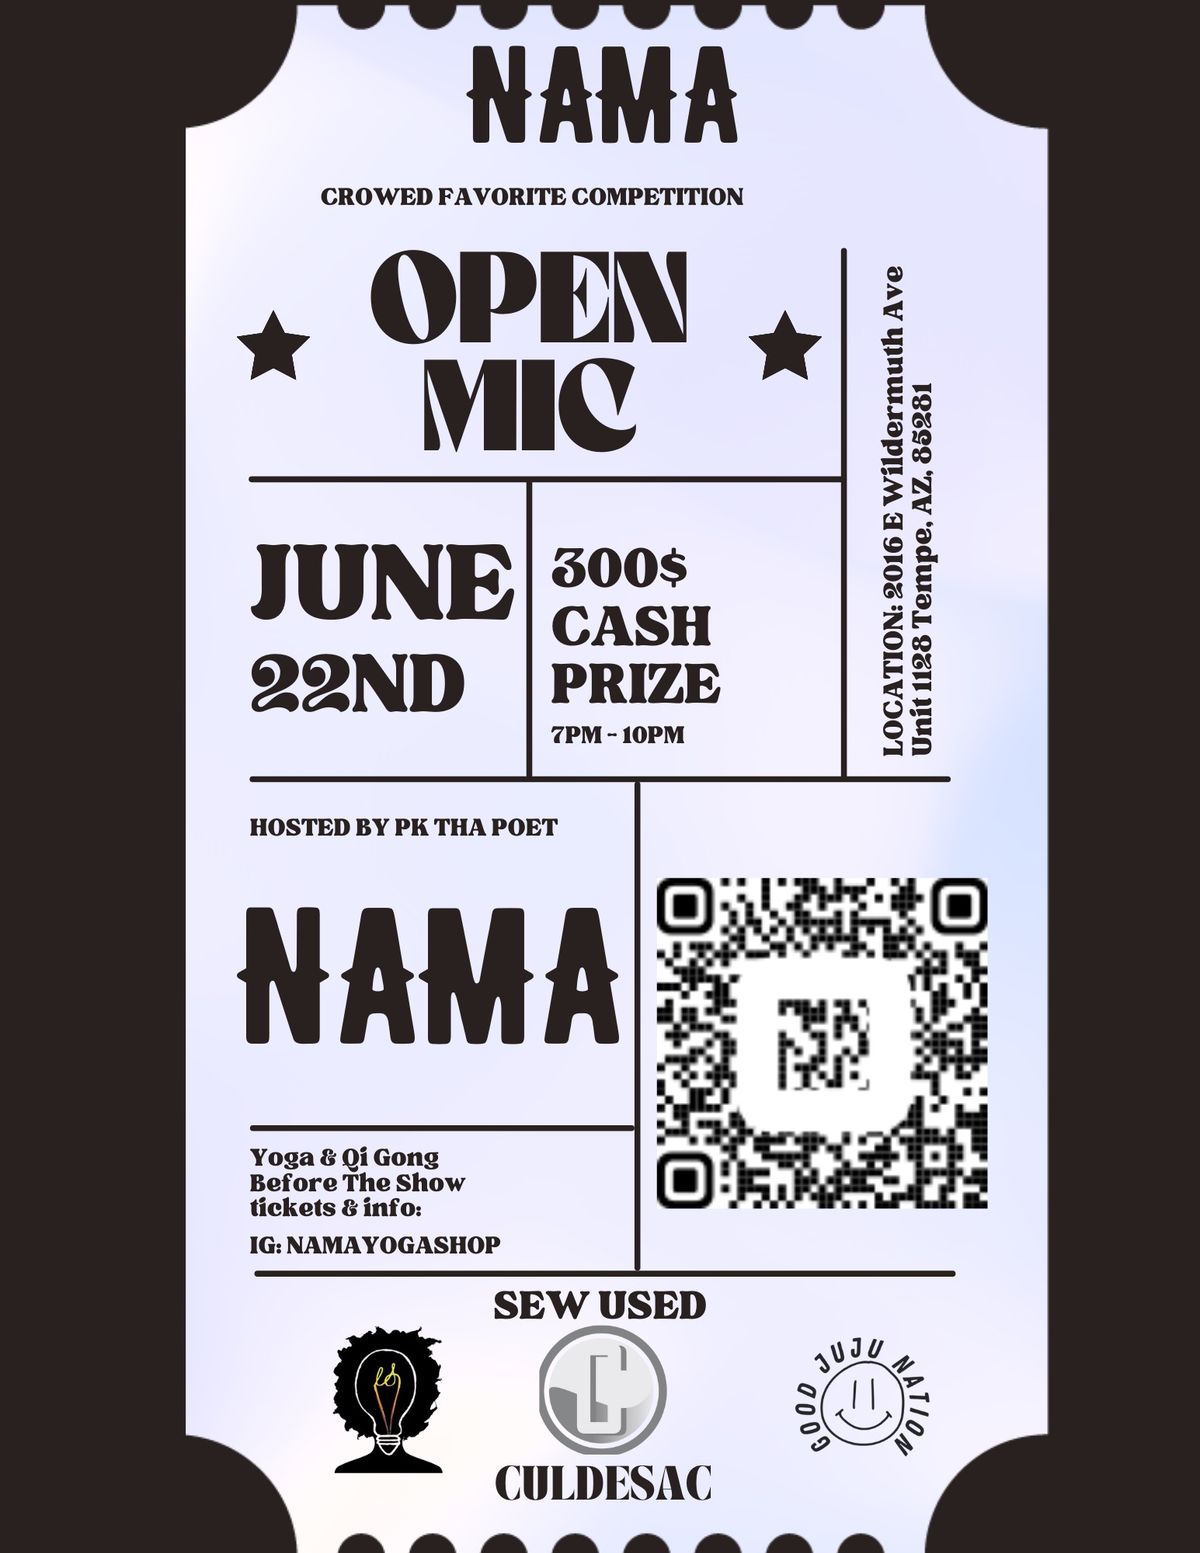 $300 cash prize open mic Tempe: Juneteenth